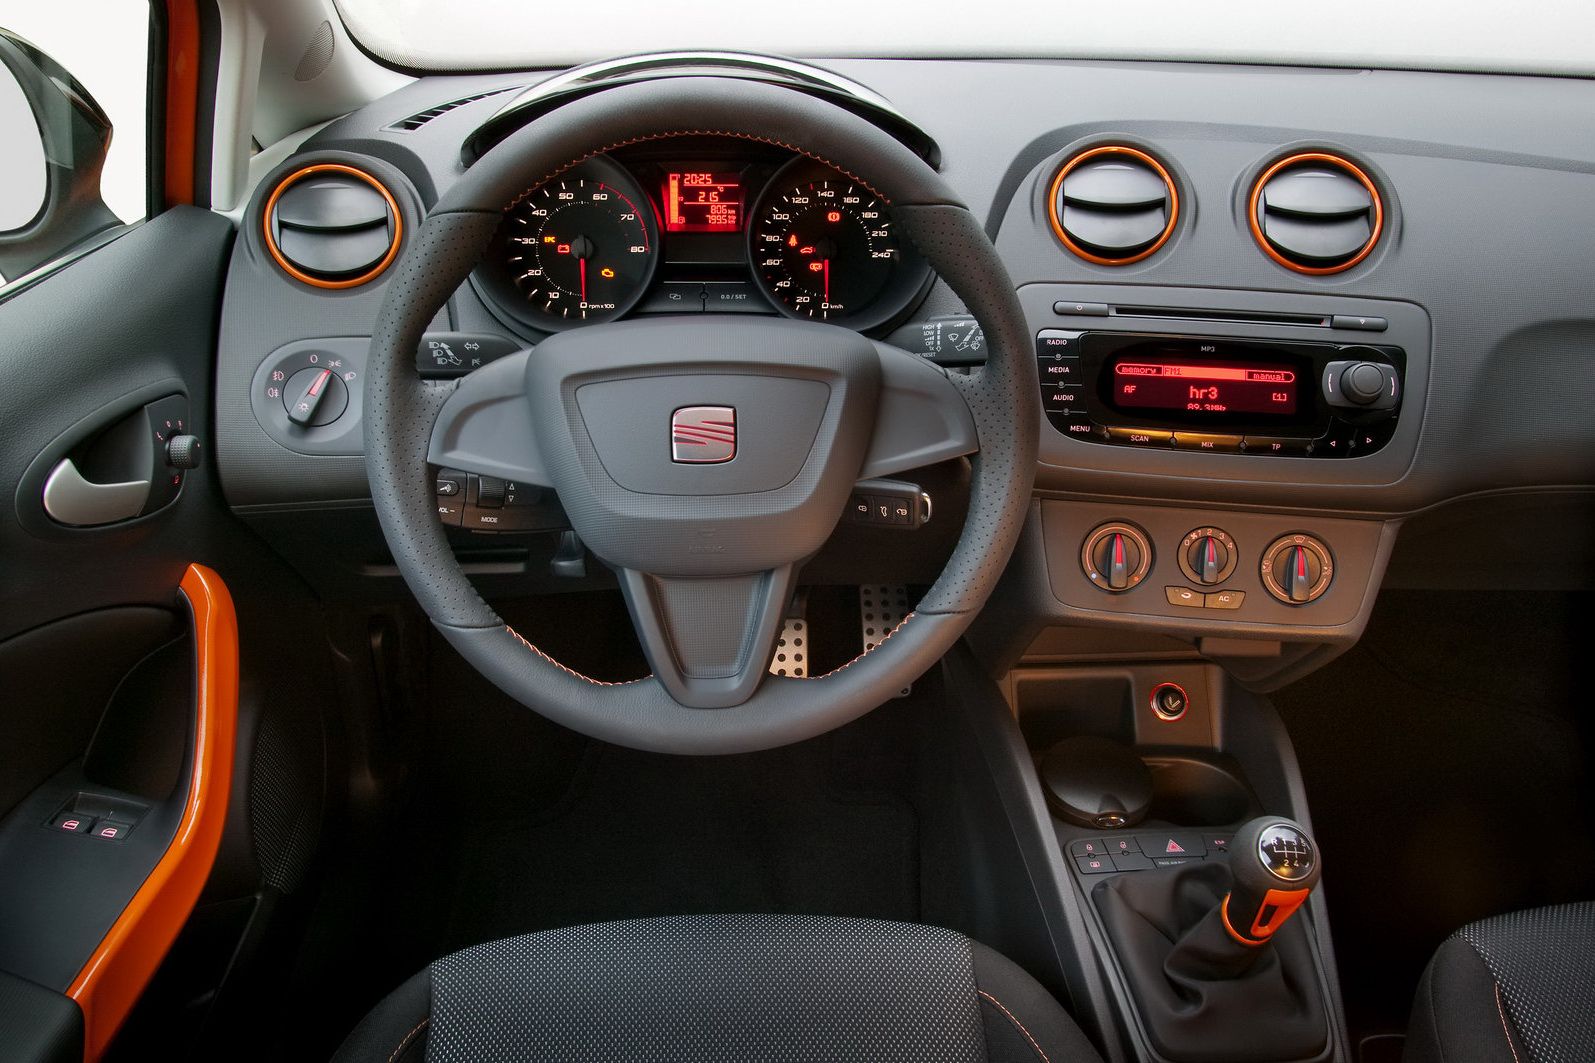 2010 Seat Ibiza SC Sport Limited Edition